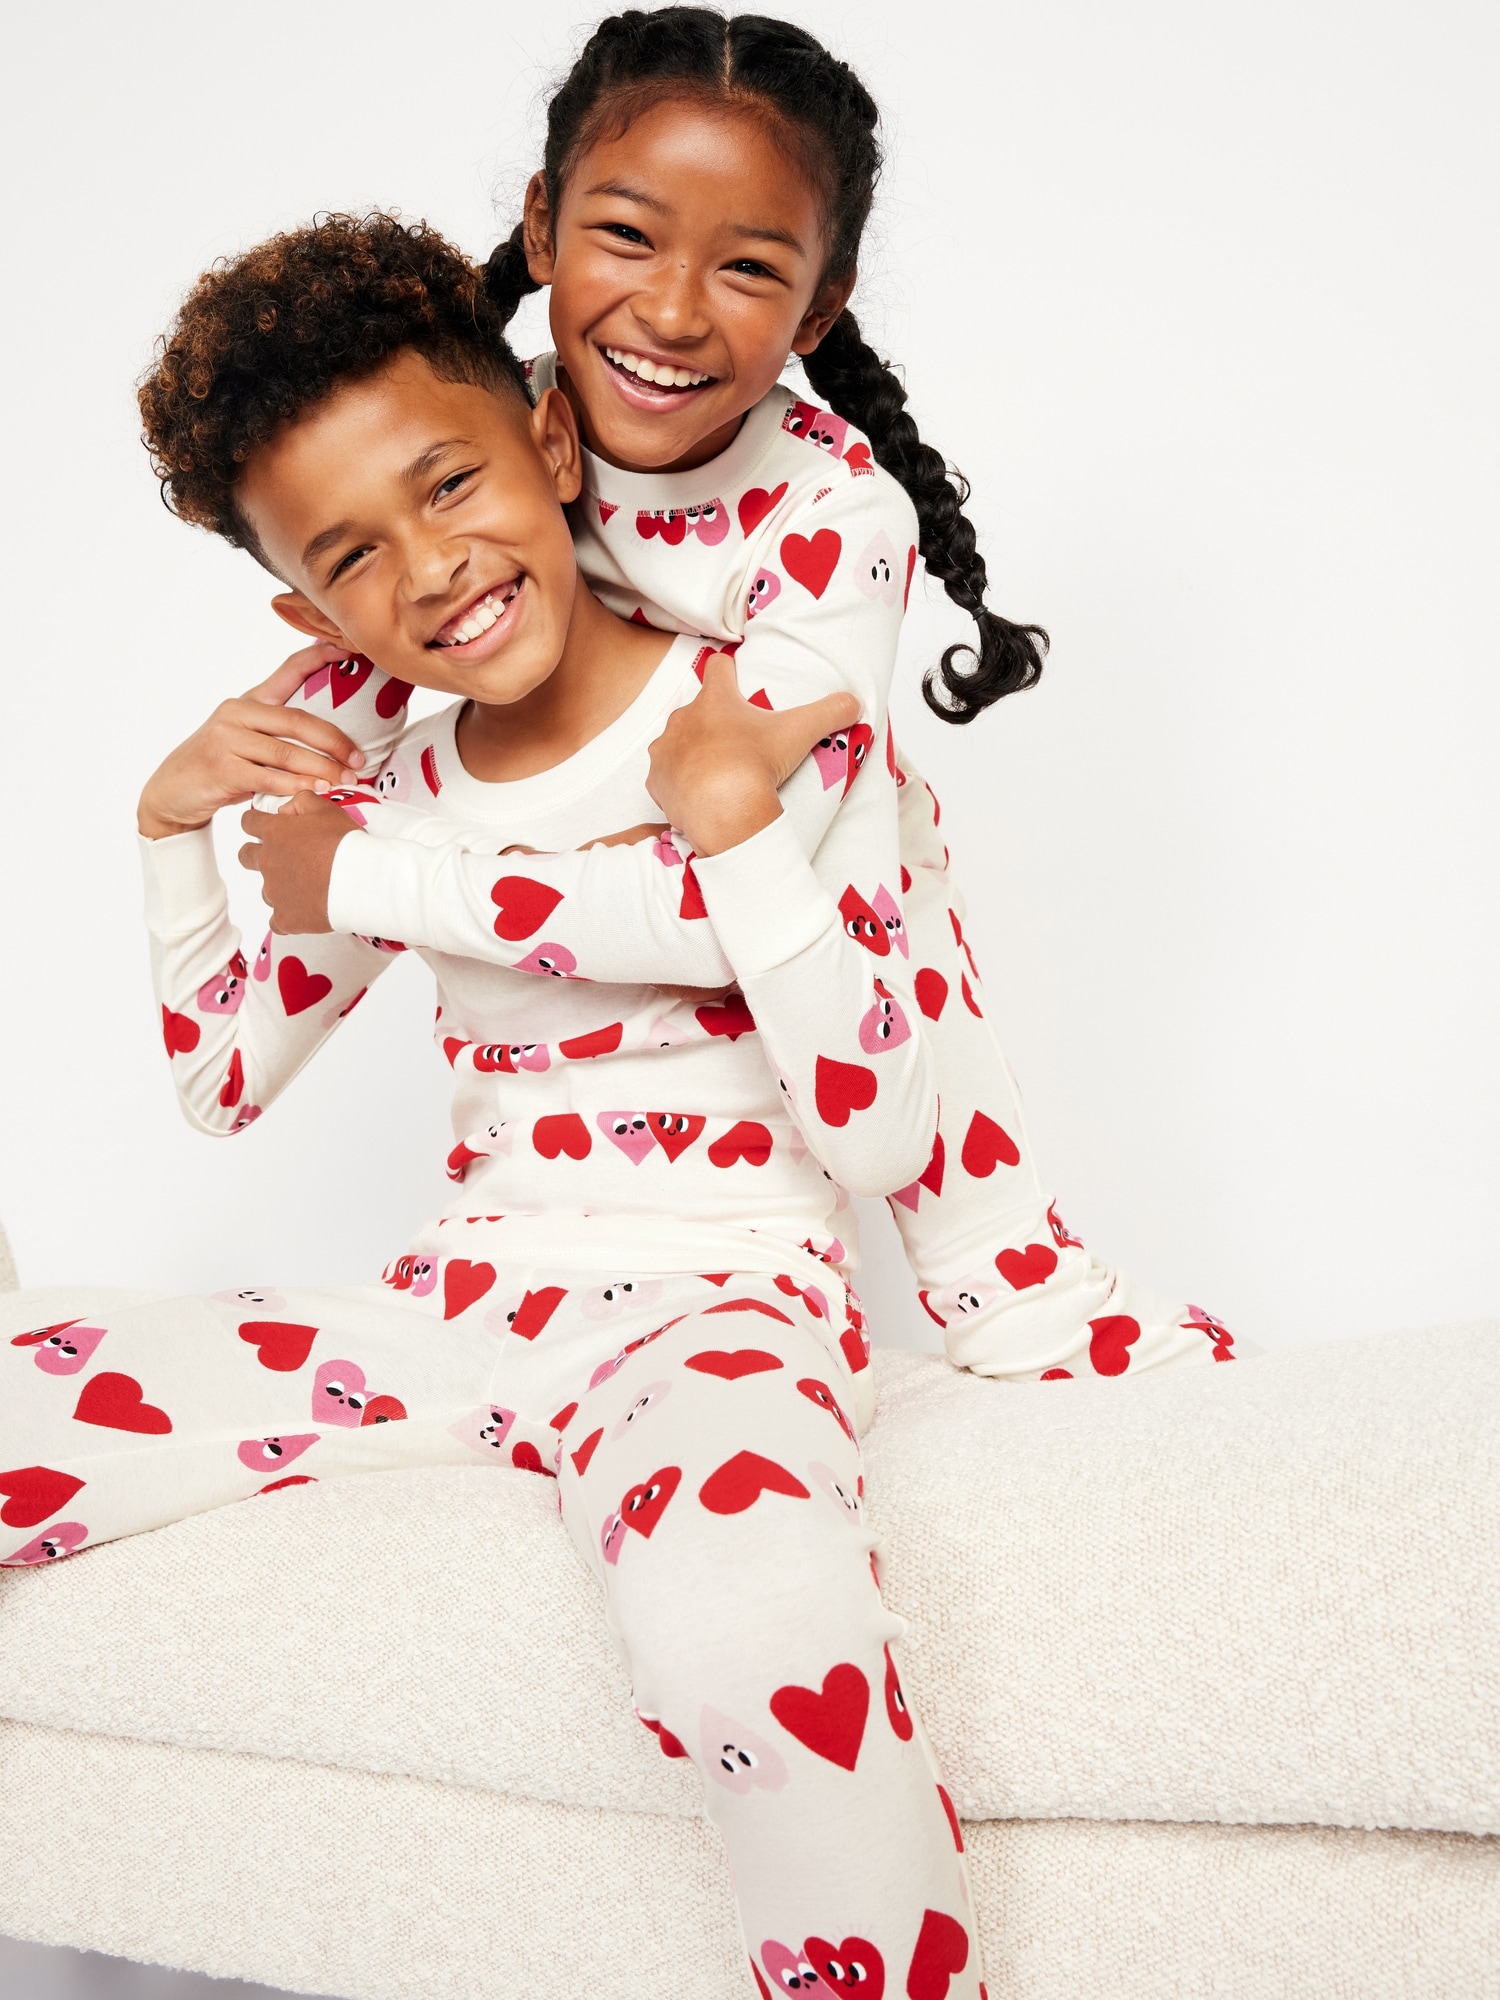 Matching Gender-Neutral Printed Snug-Fit Pajama Set for Kids